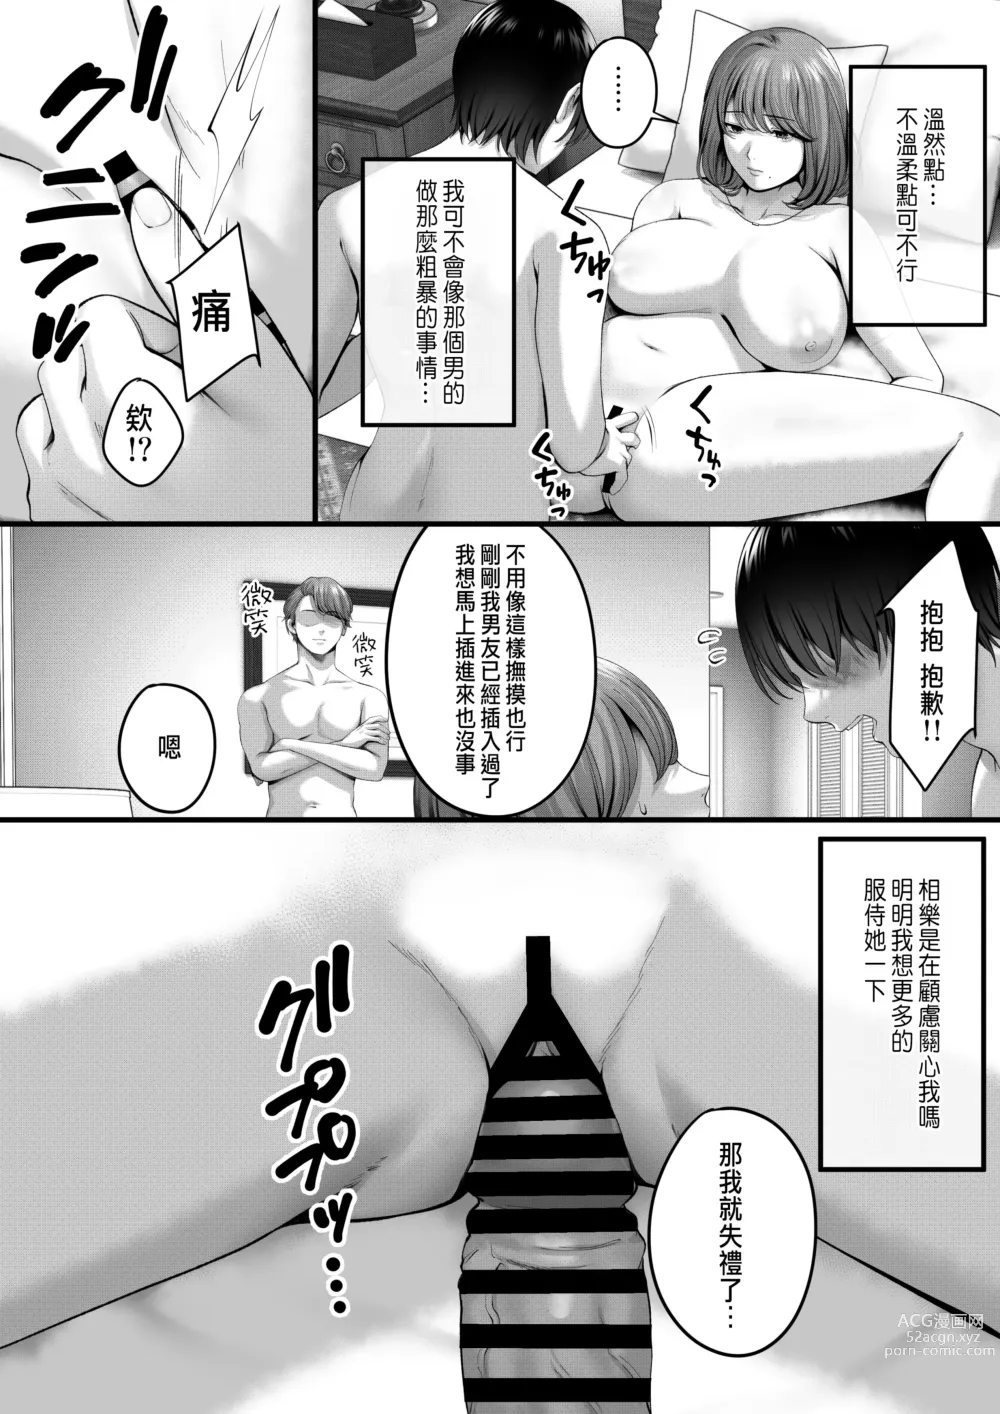 Page 26 of doujinshi Akogare datta, Sagara-san.